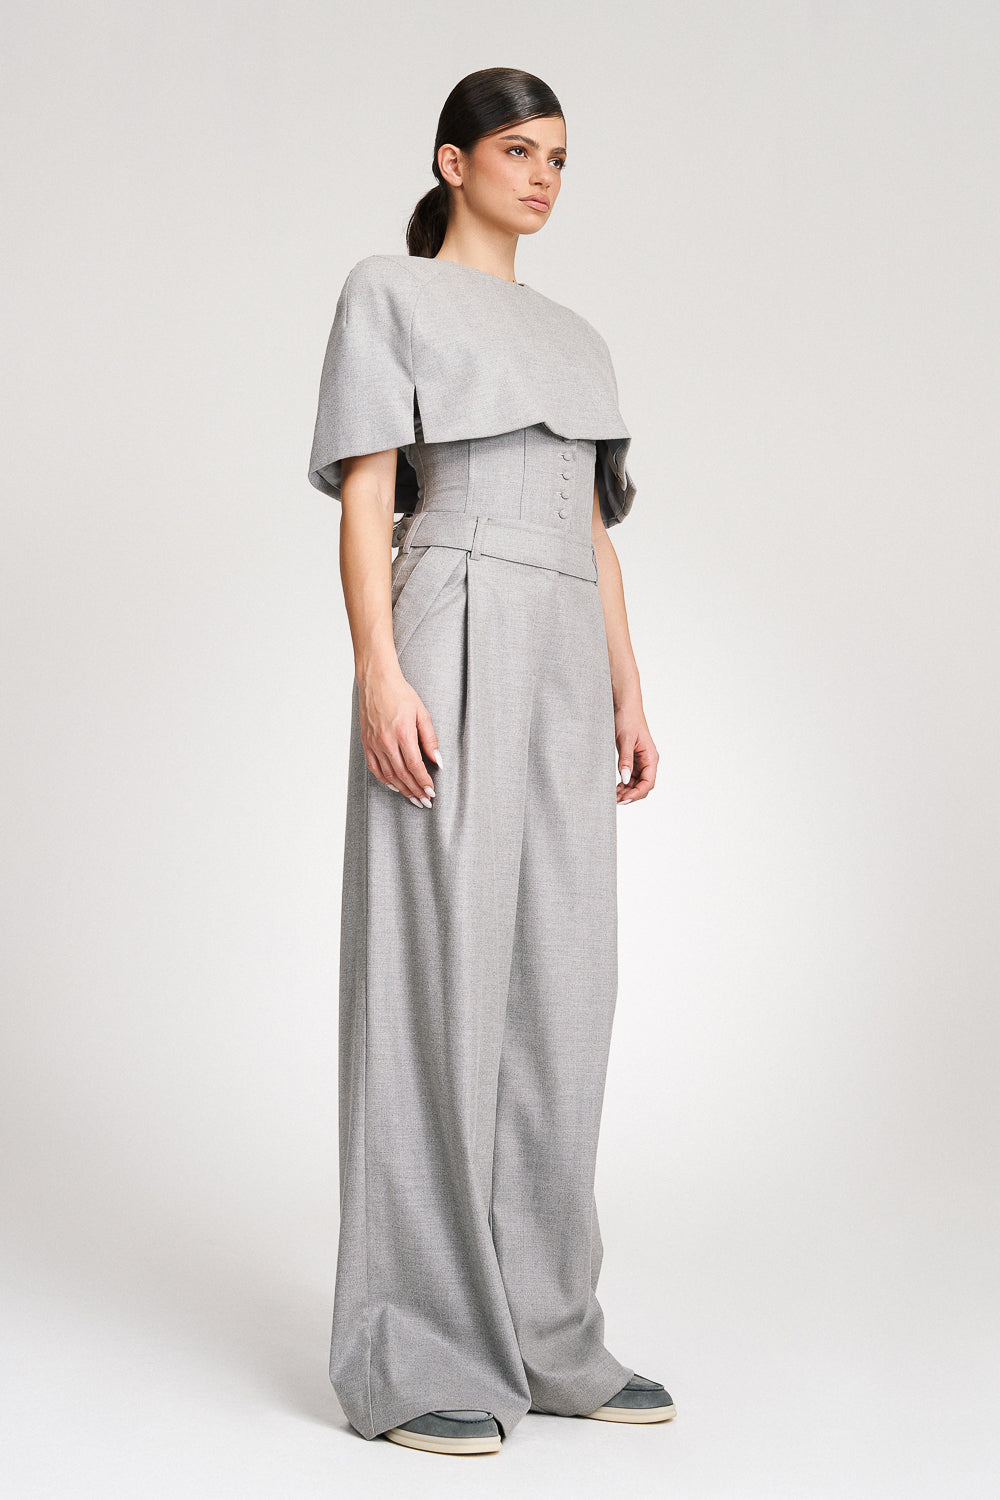 'Eleonore' Grey Cape-Effect Wool Blouse